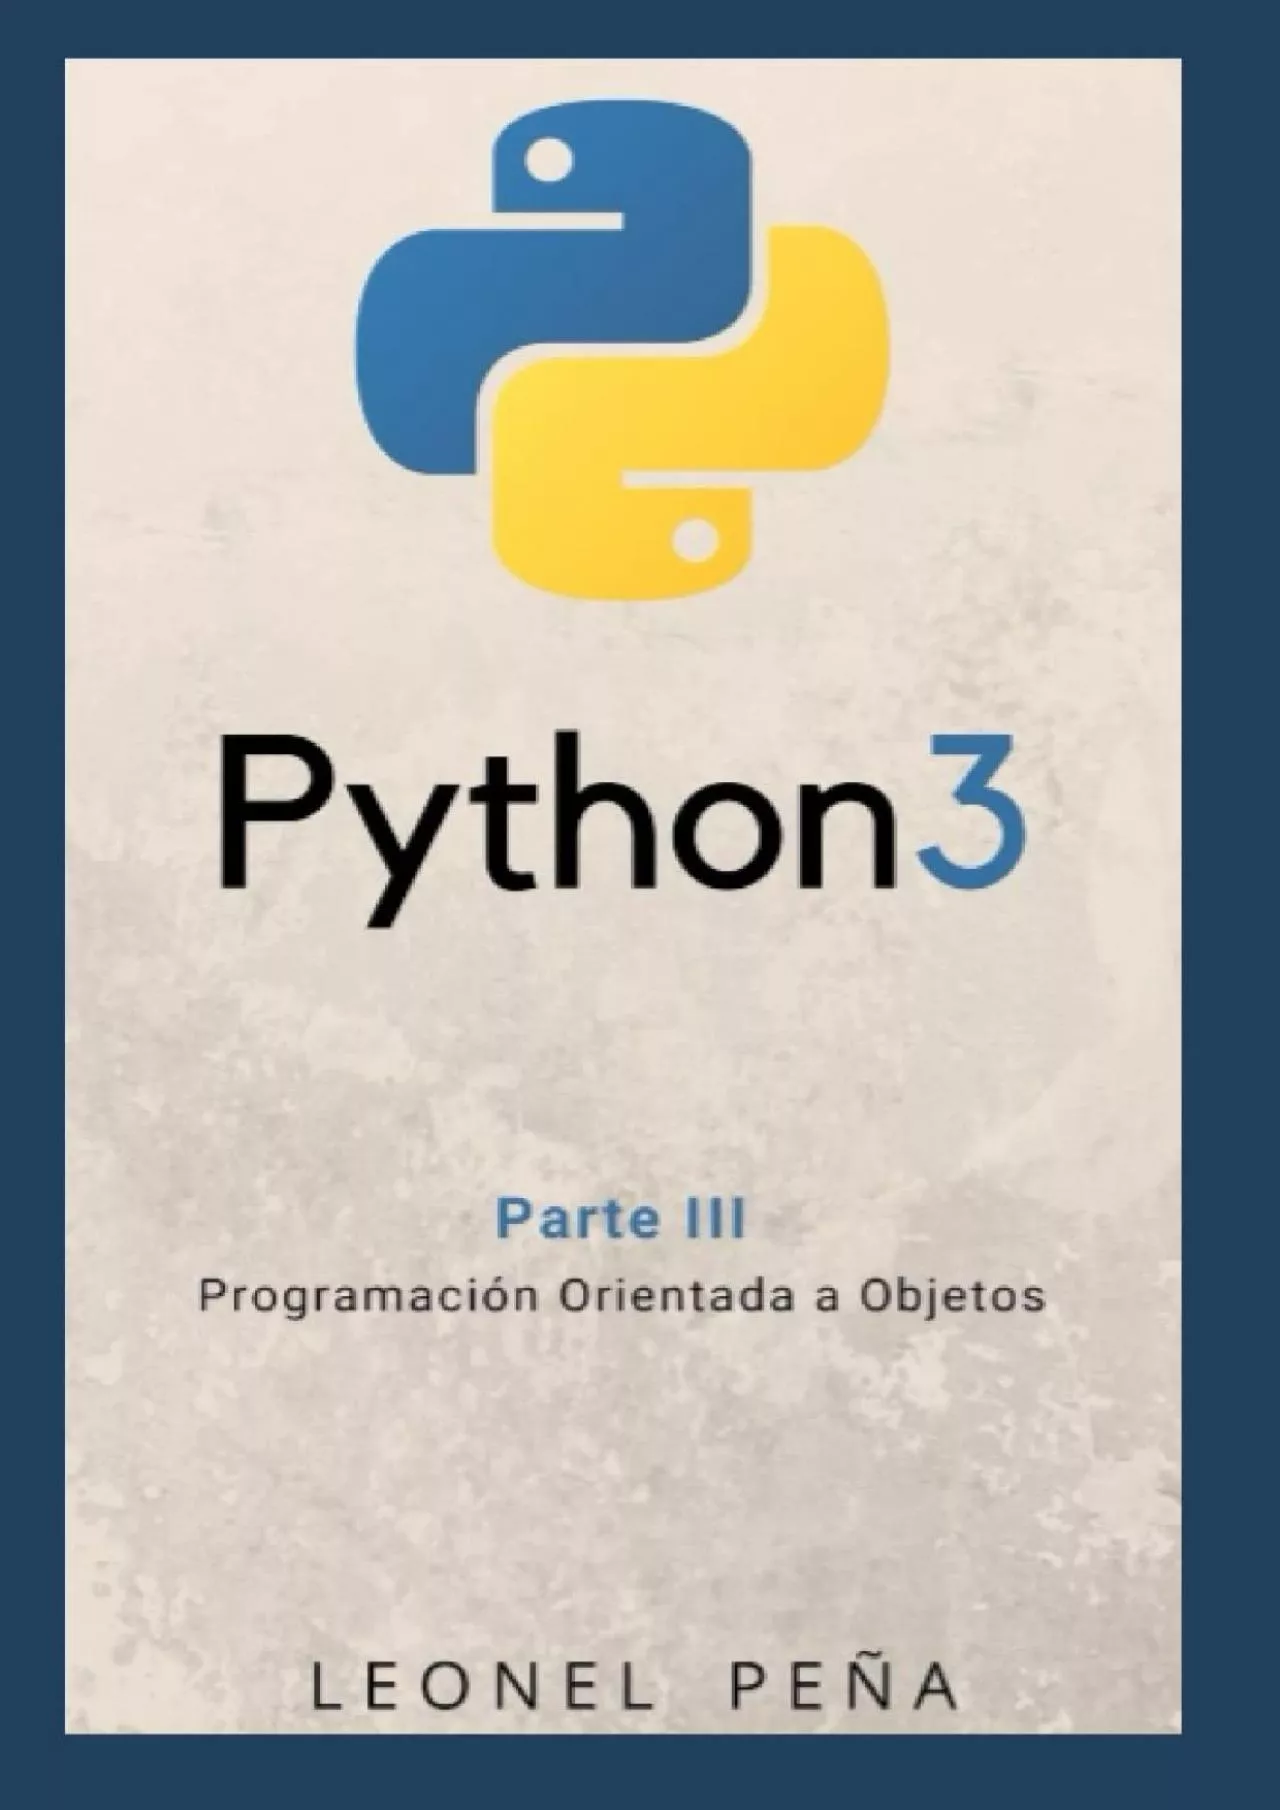 [PDF]-PYTHON 3 Parte III - Programación Orientada a Objetos (Aprende Python 3 Desde Cero